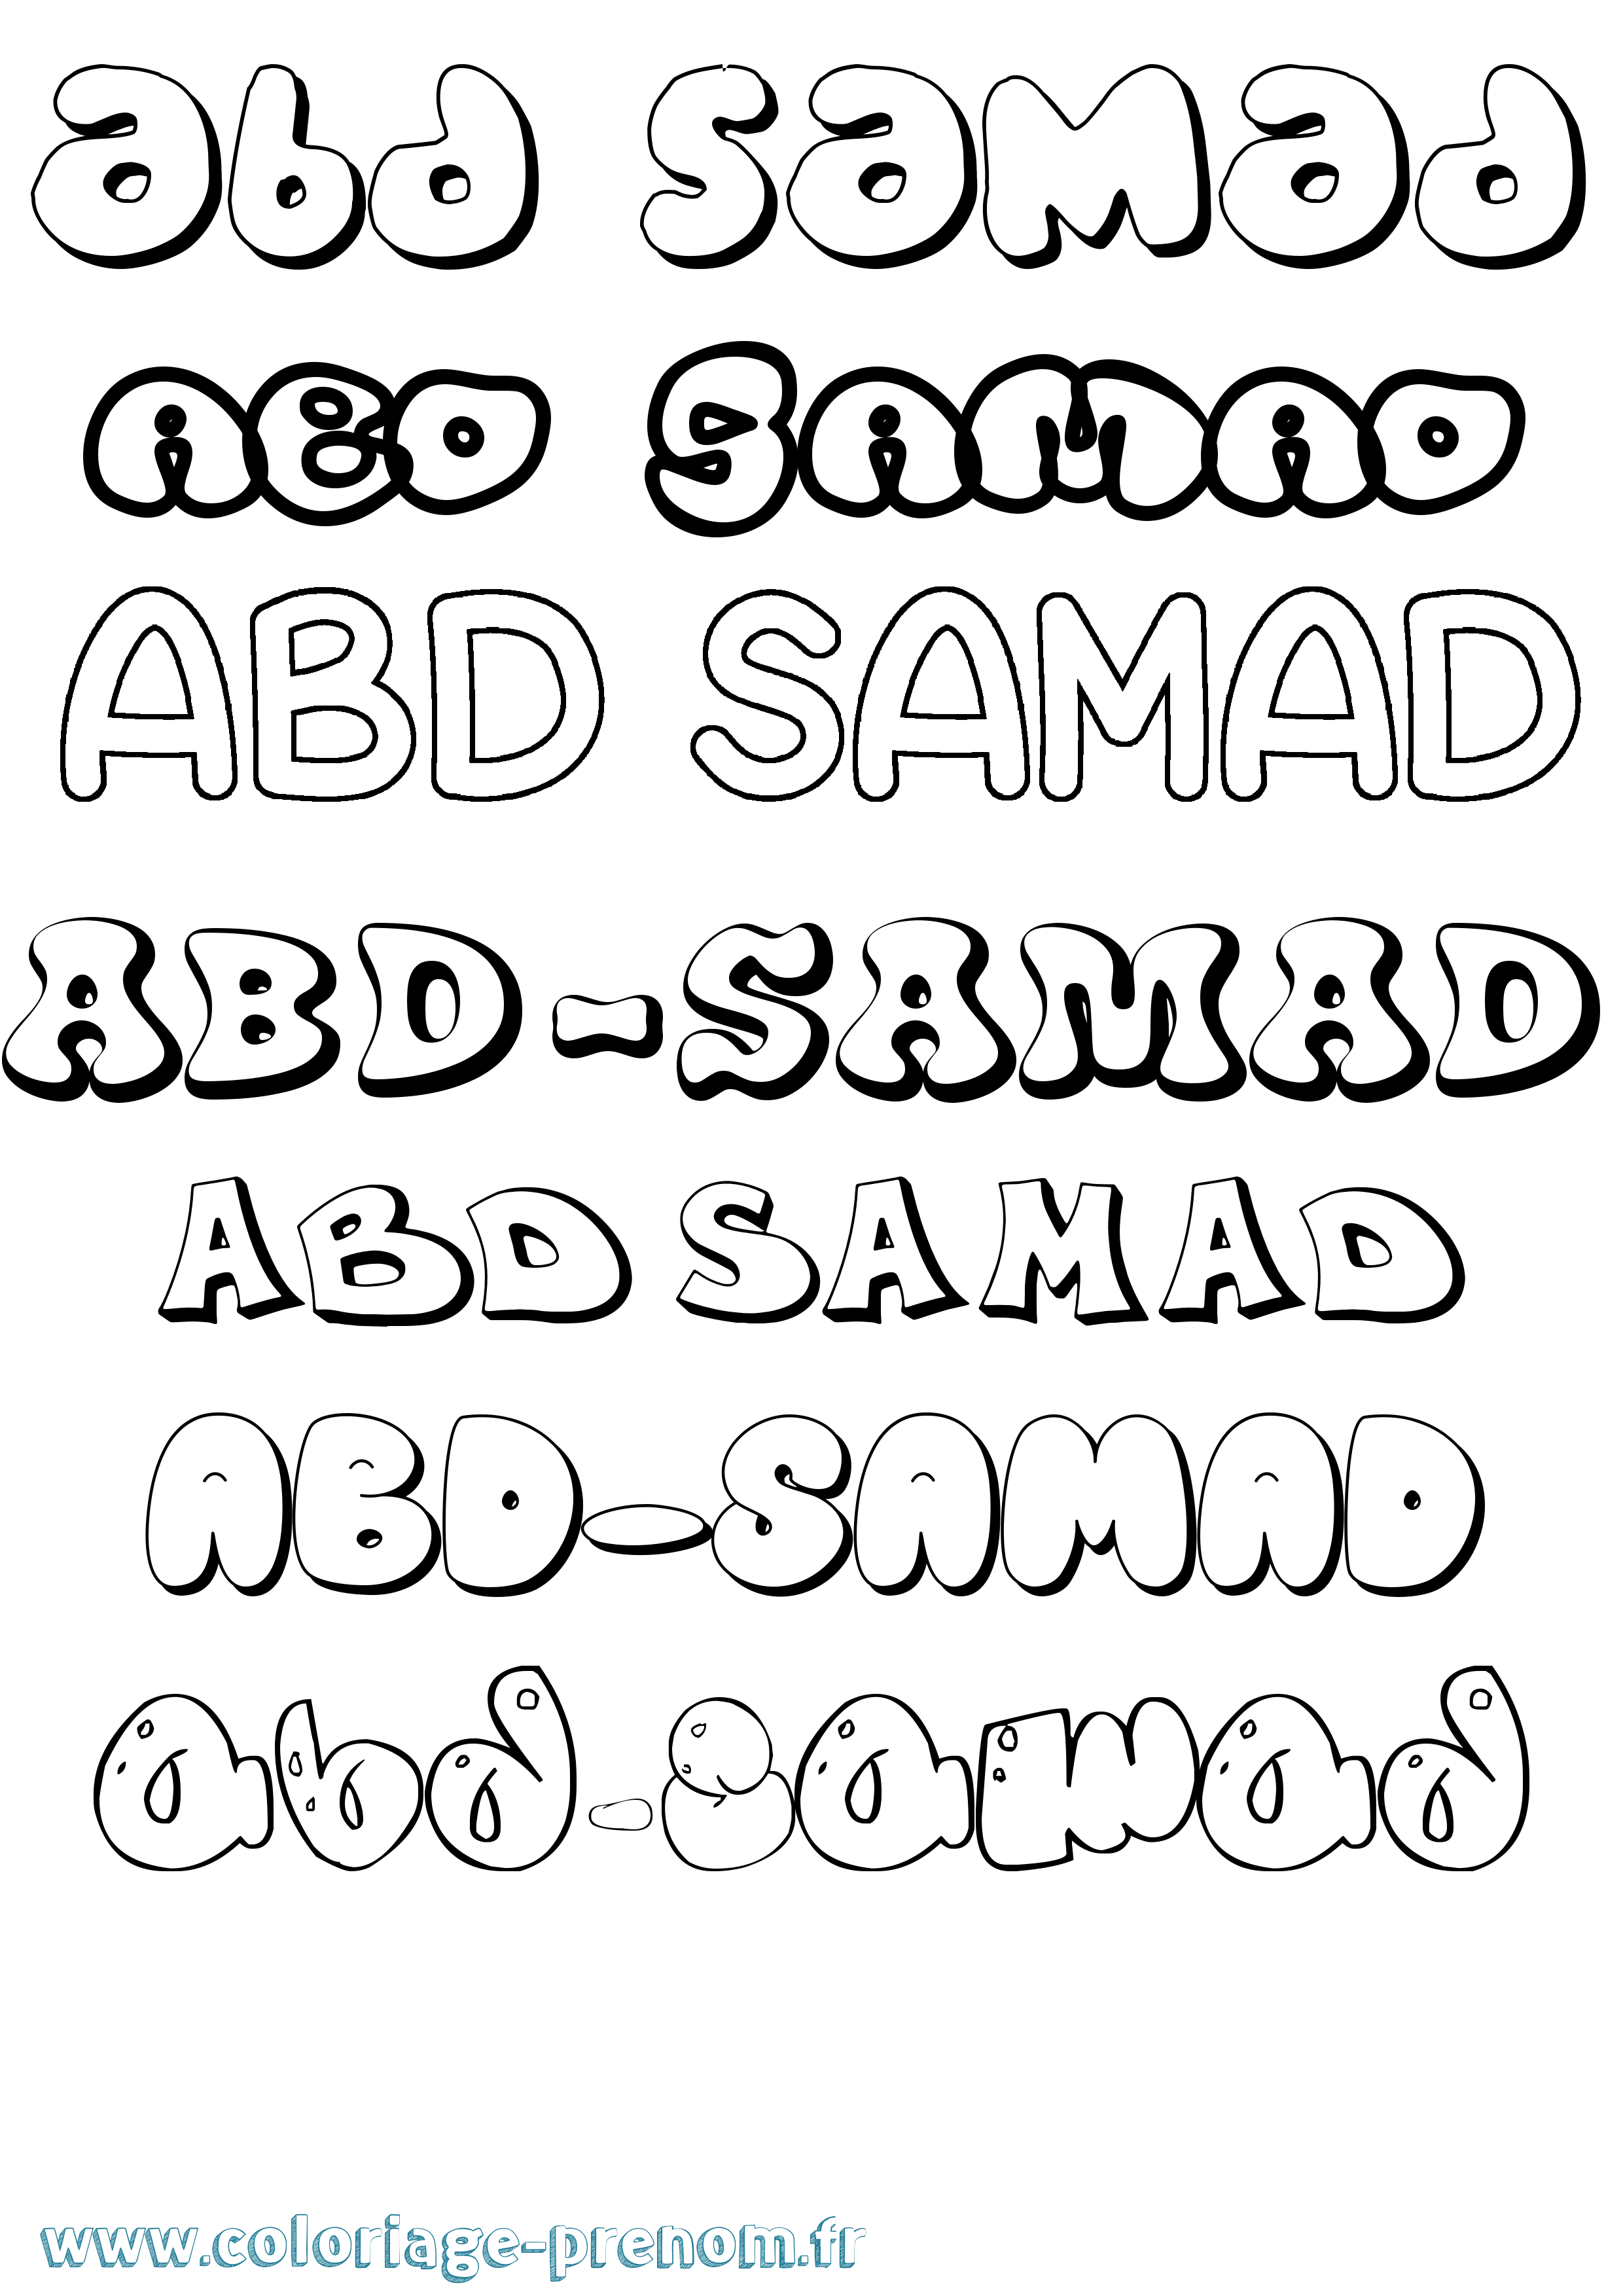 Coloriage prénom Abd-Samad Bubble